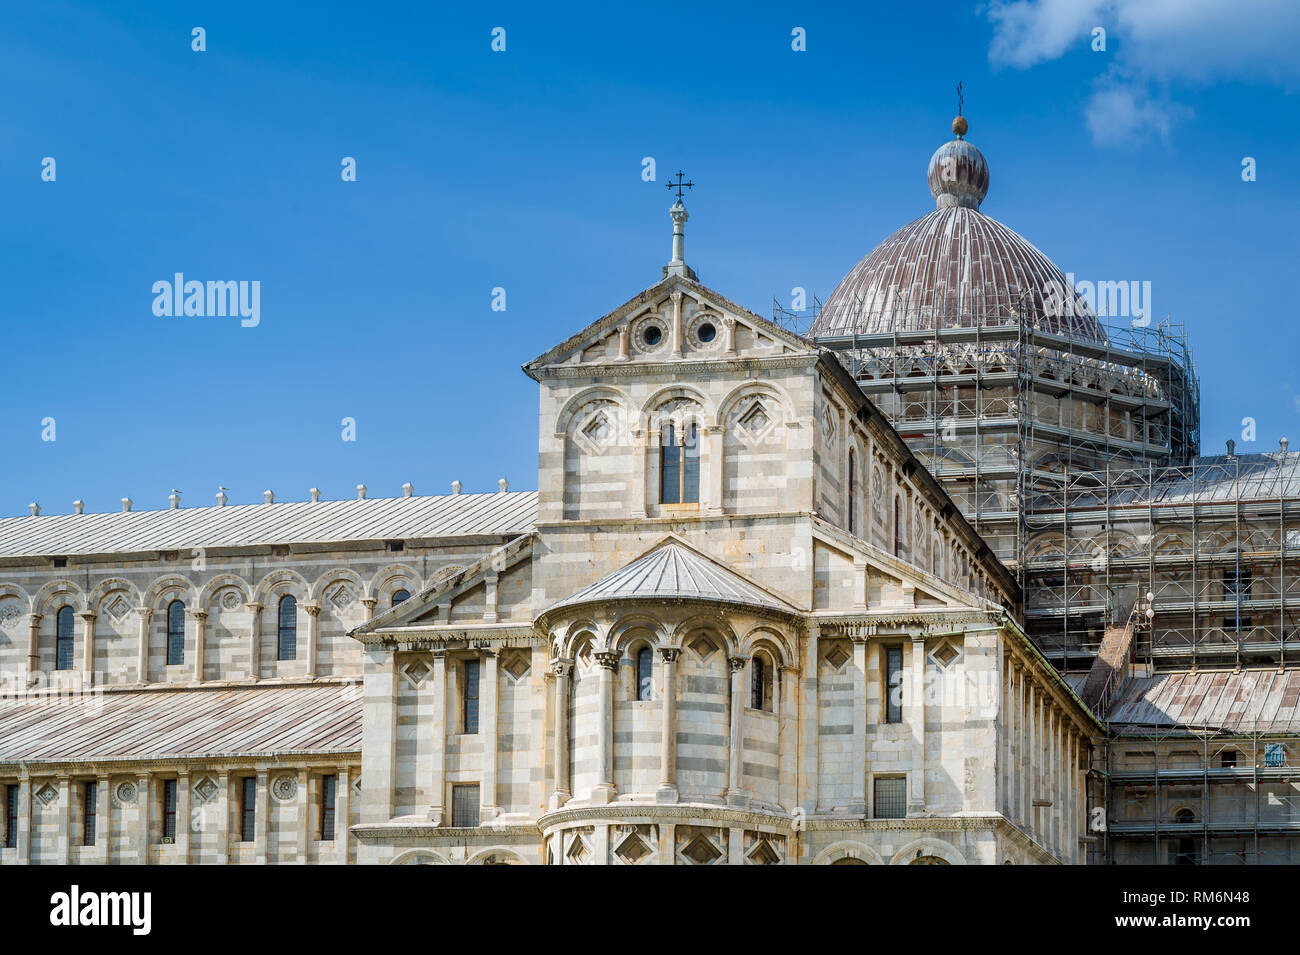 Duomo di Pisa Kathedrale am zentralen Platz von Pisa. Toscana Provinz, Italien. Stockfoto